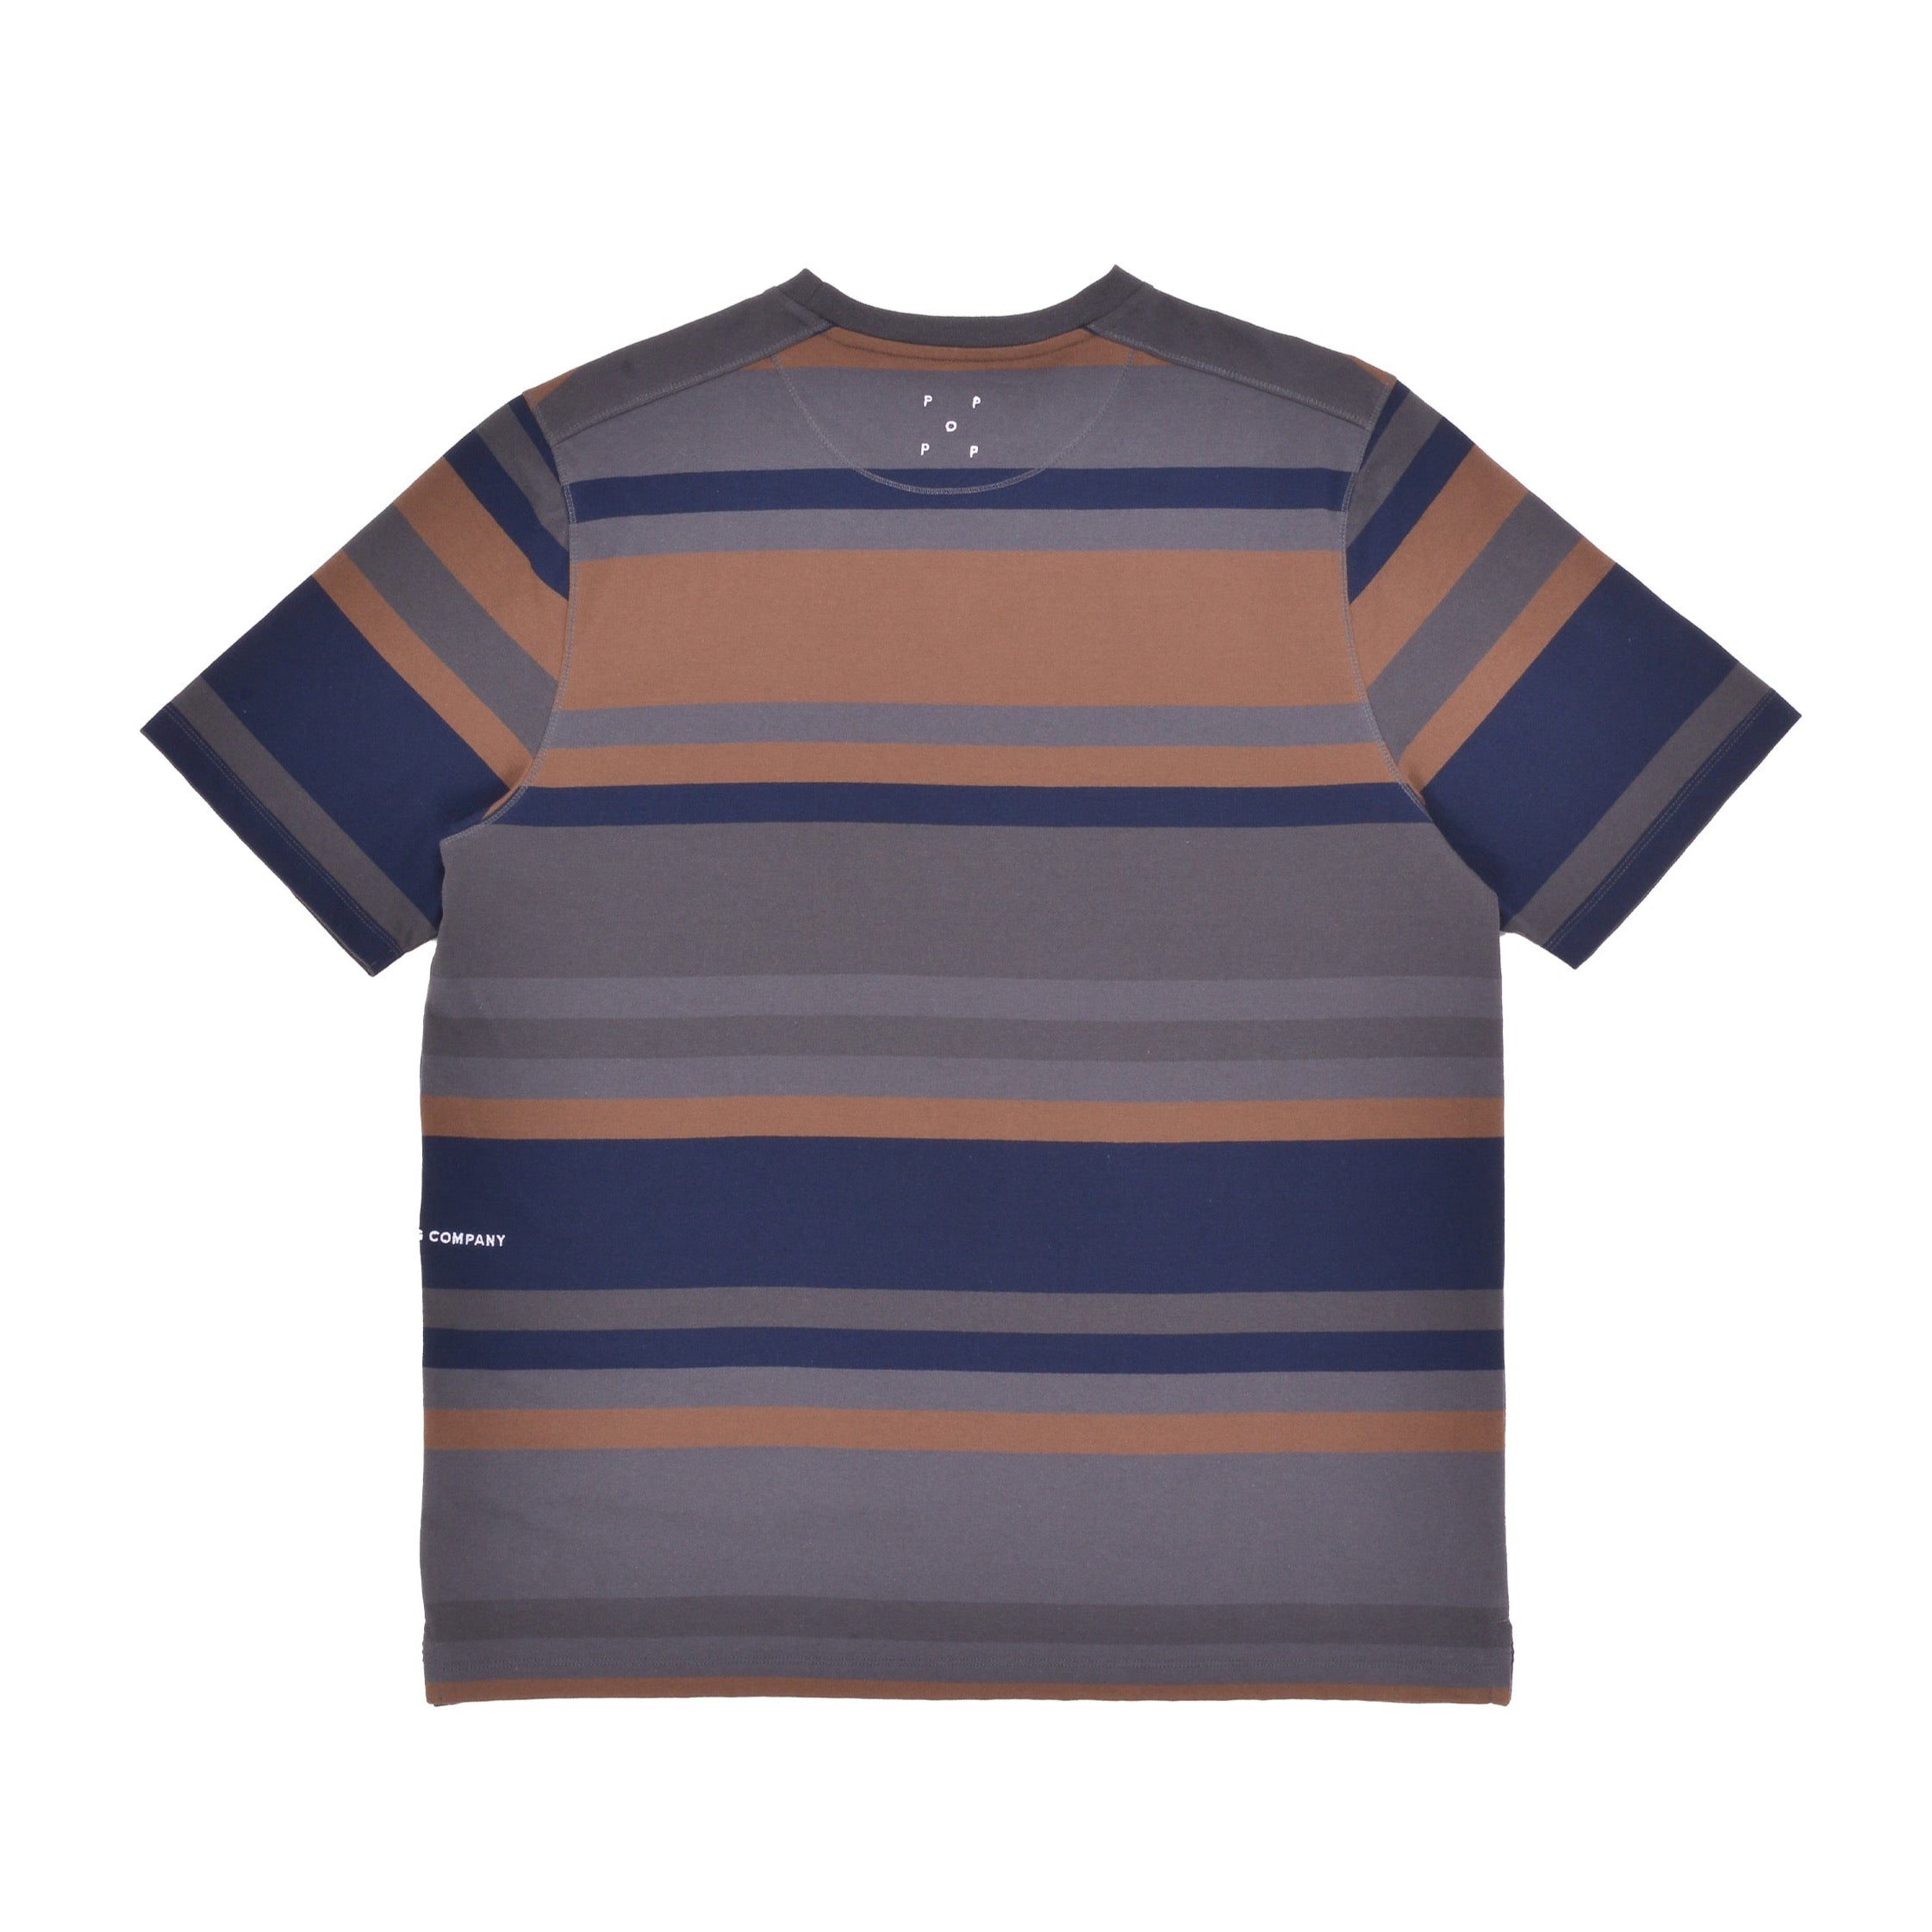 Pop Trading Company - Pop Trading Co - Striped T-Shirt - Multi